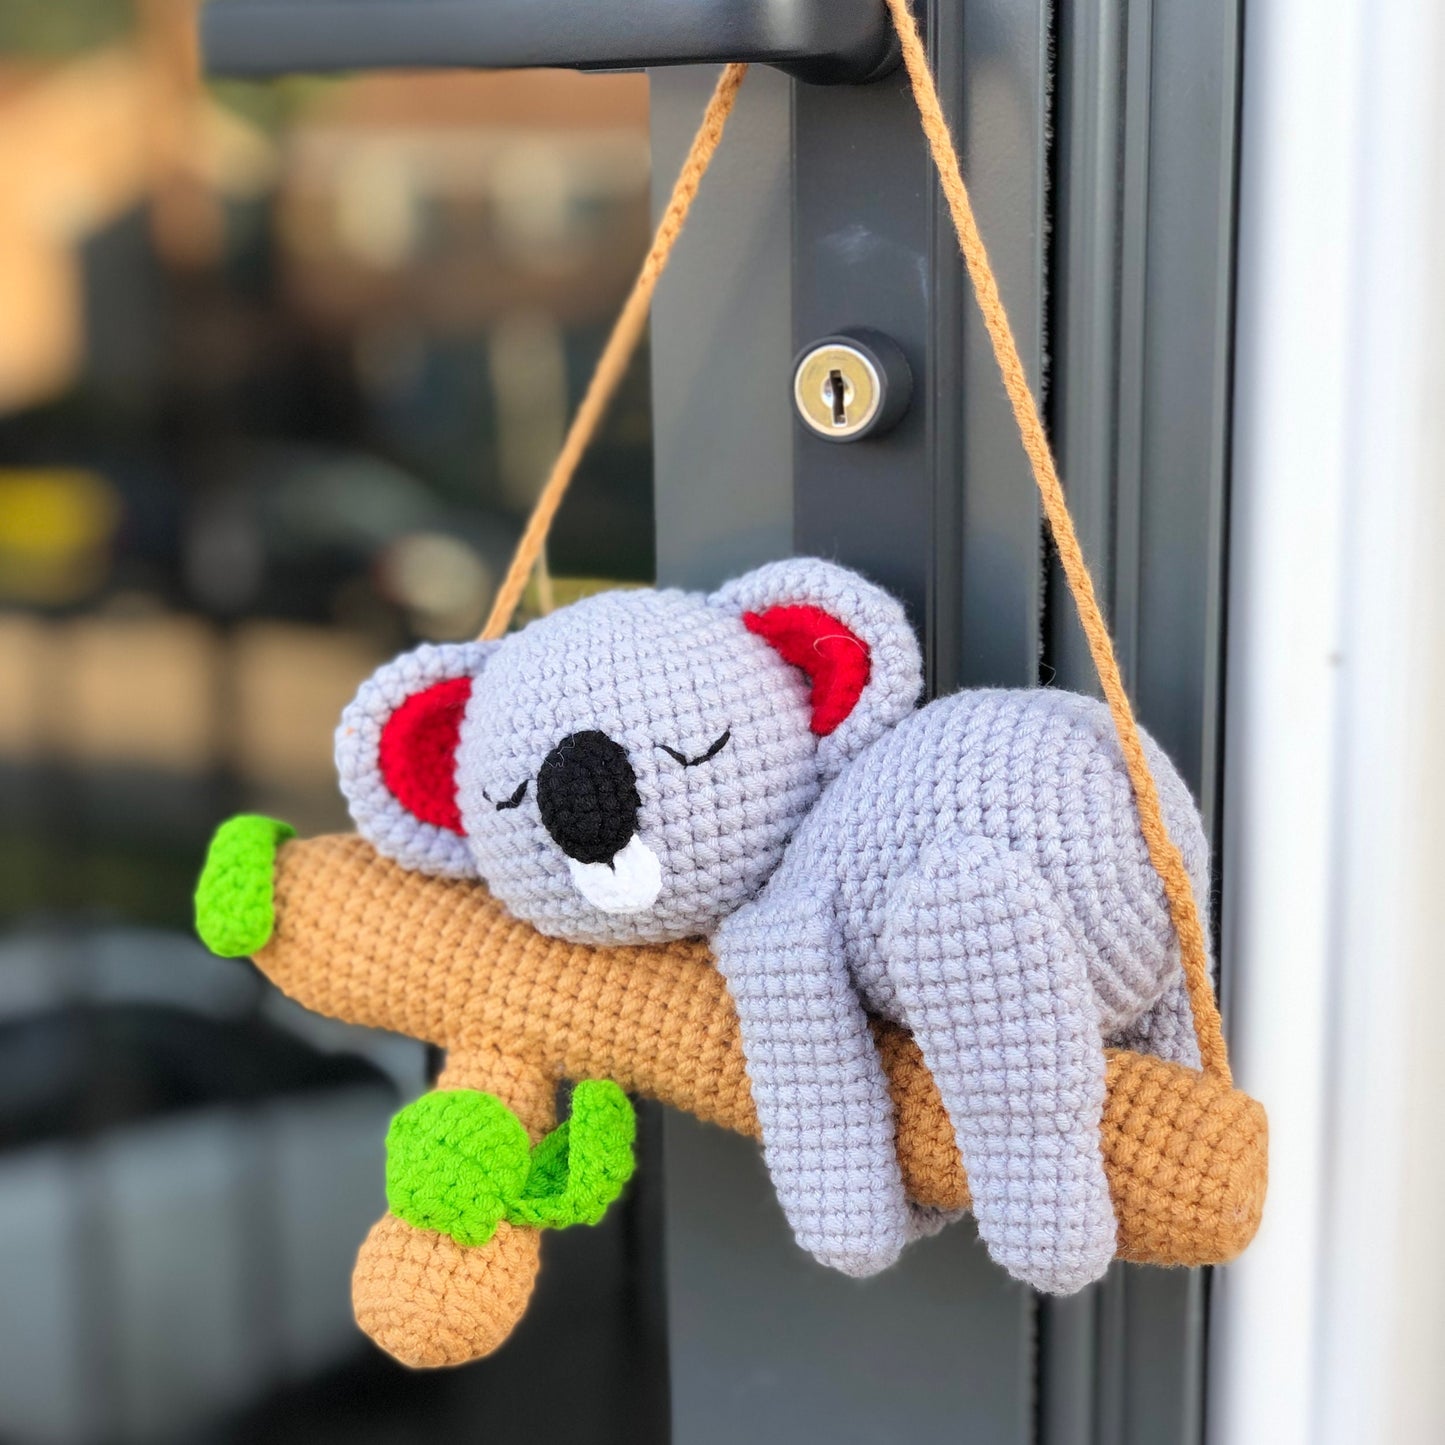 Handmade crochet hanging, car rearview mirror charm crochet amigurumi, plushie toy, gift, car hanging accessory